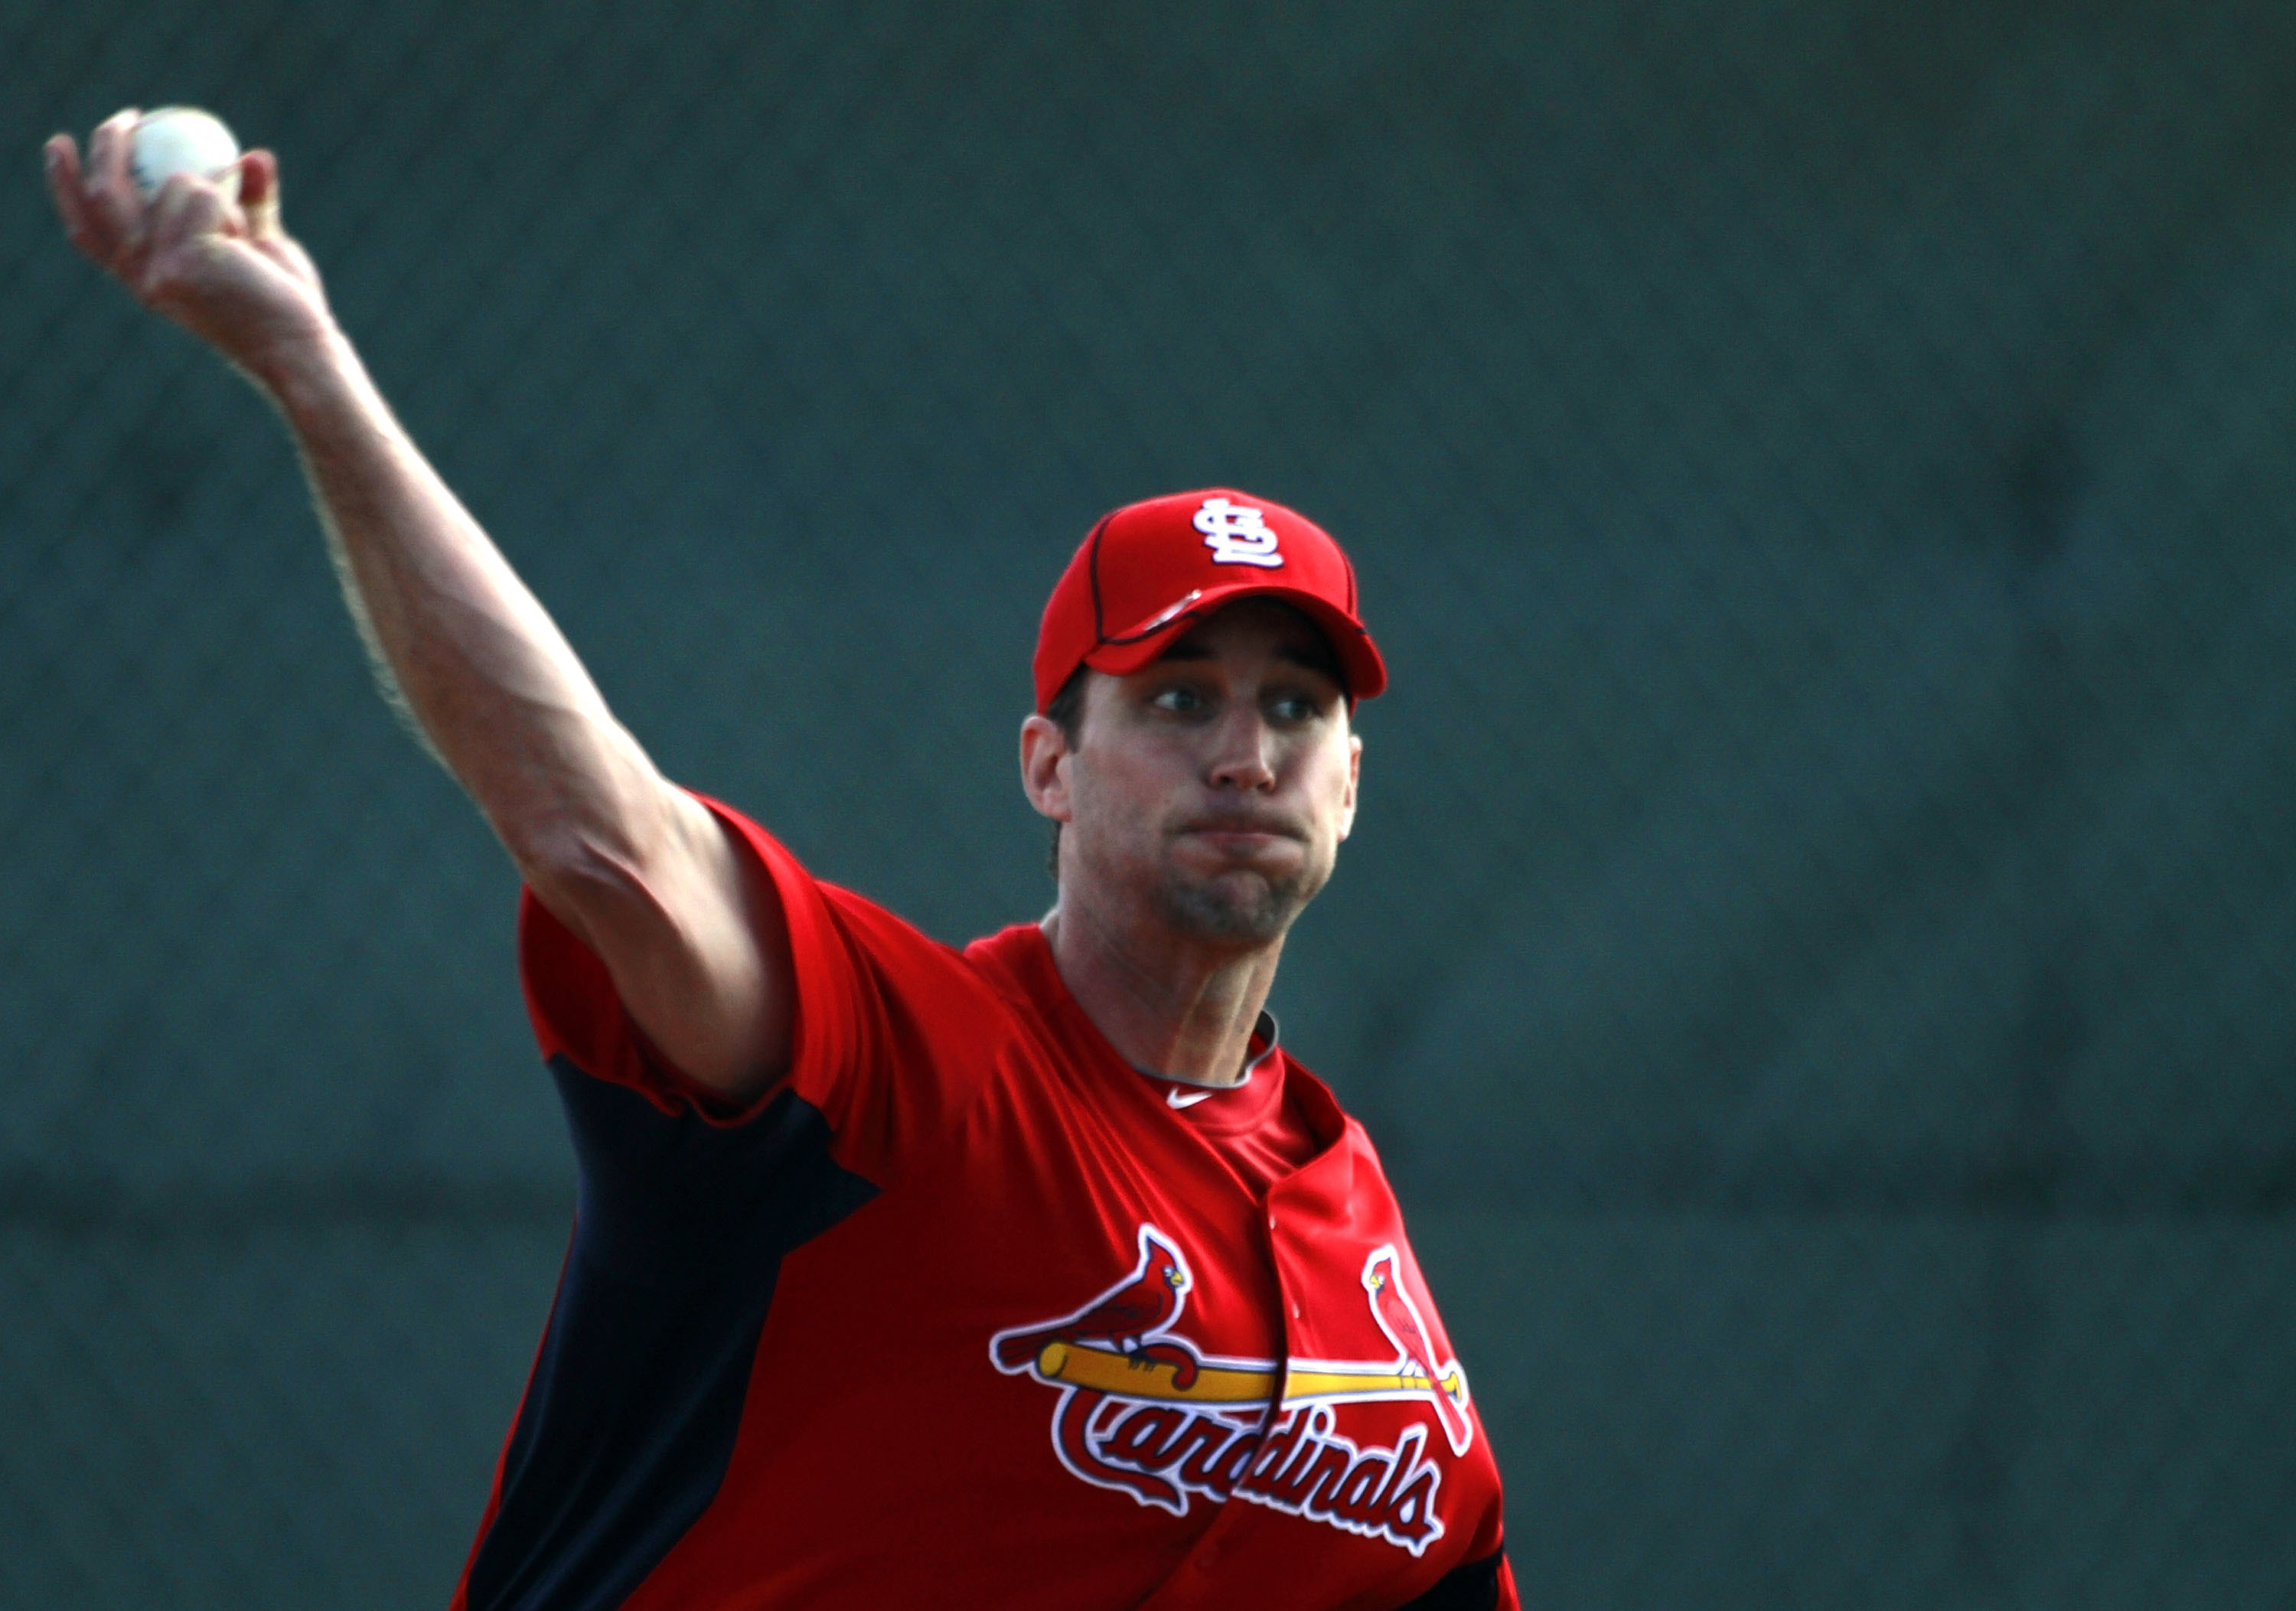 St. Louis Cardinals pitcher Adam Wainwright injures elbow, could